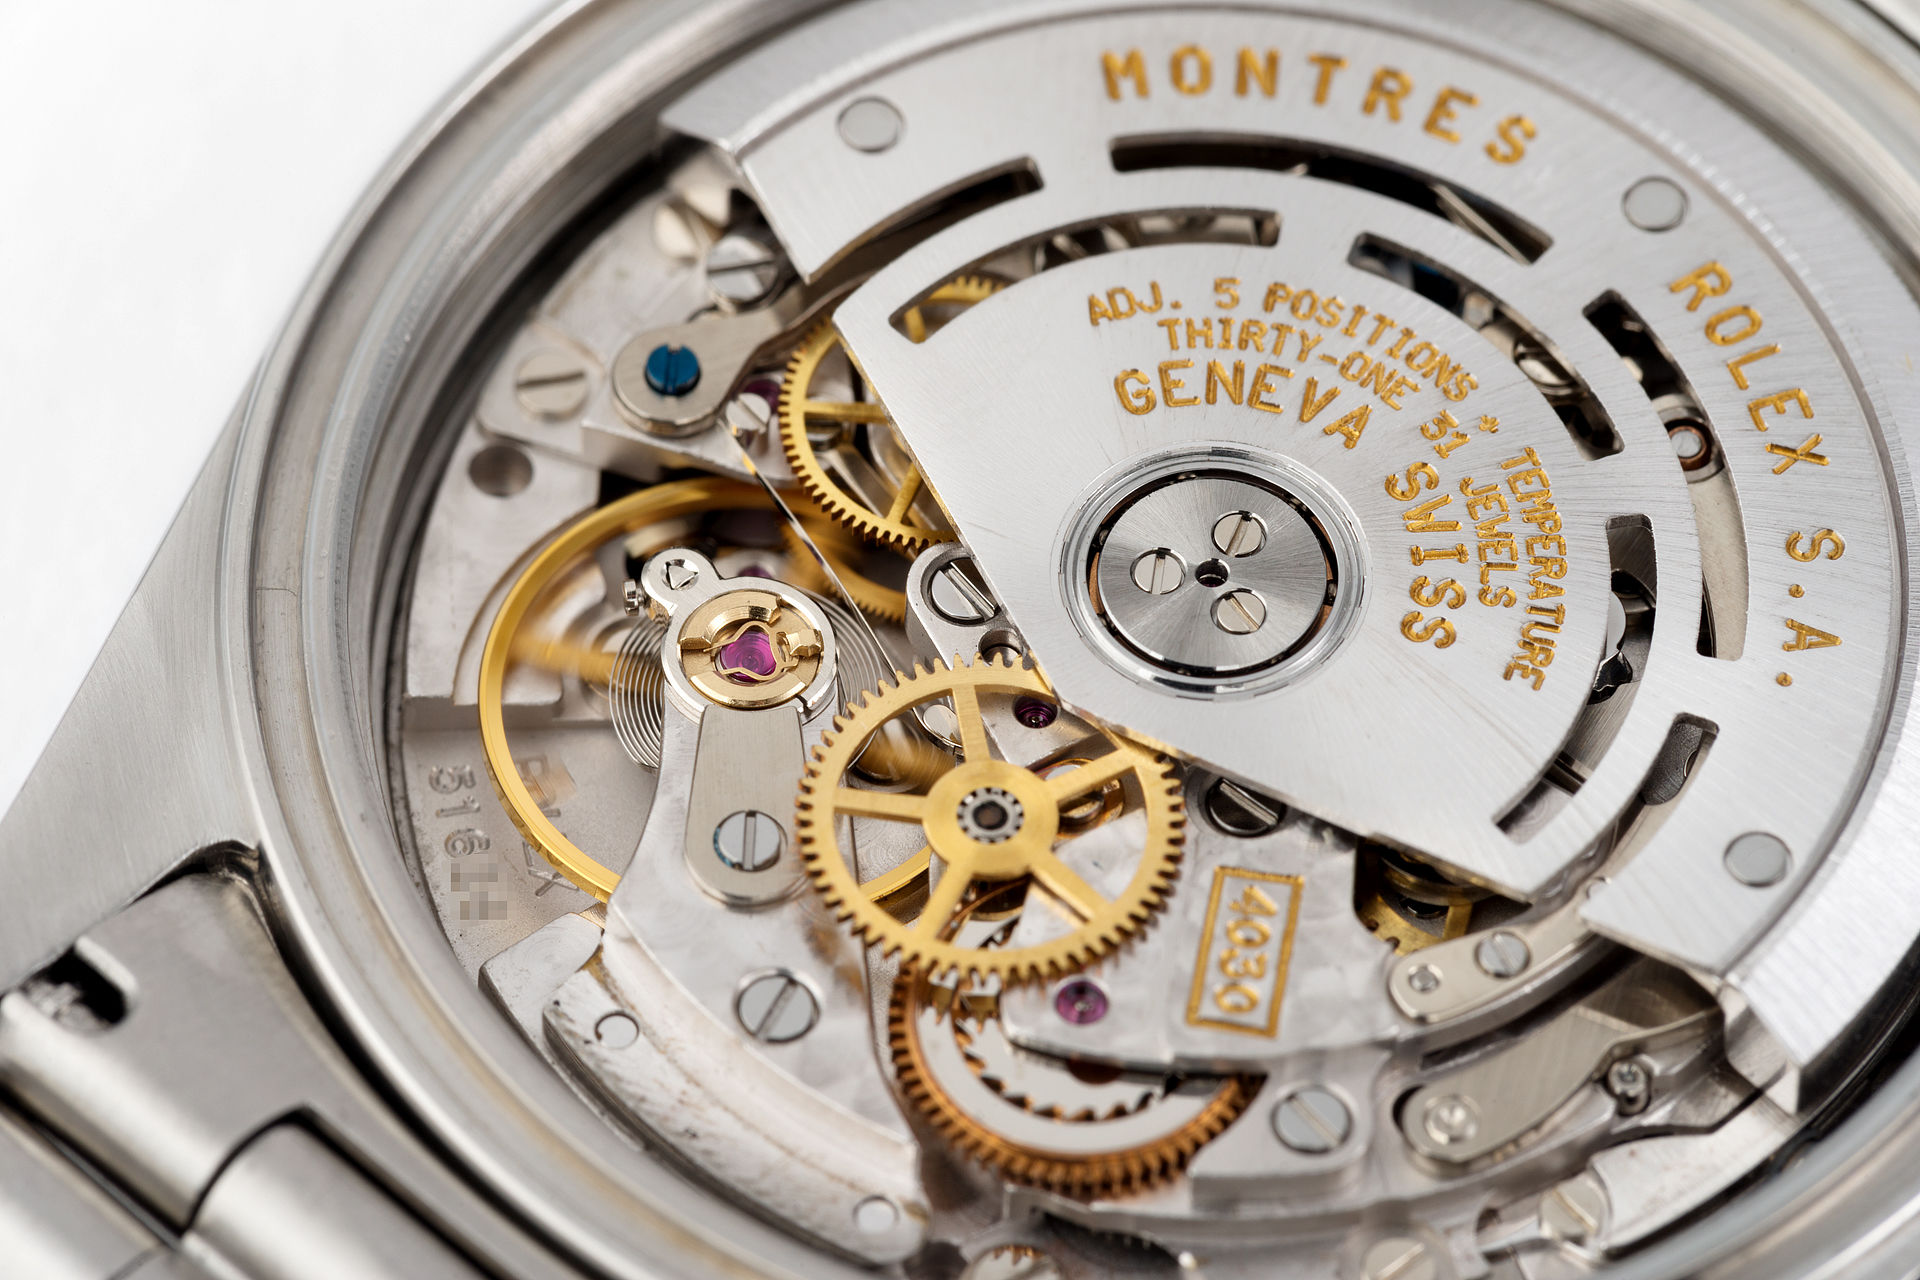 Rolex Cosmograph Daytona Watches | ref 16520 | Upside Down Six | The ...